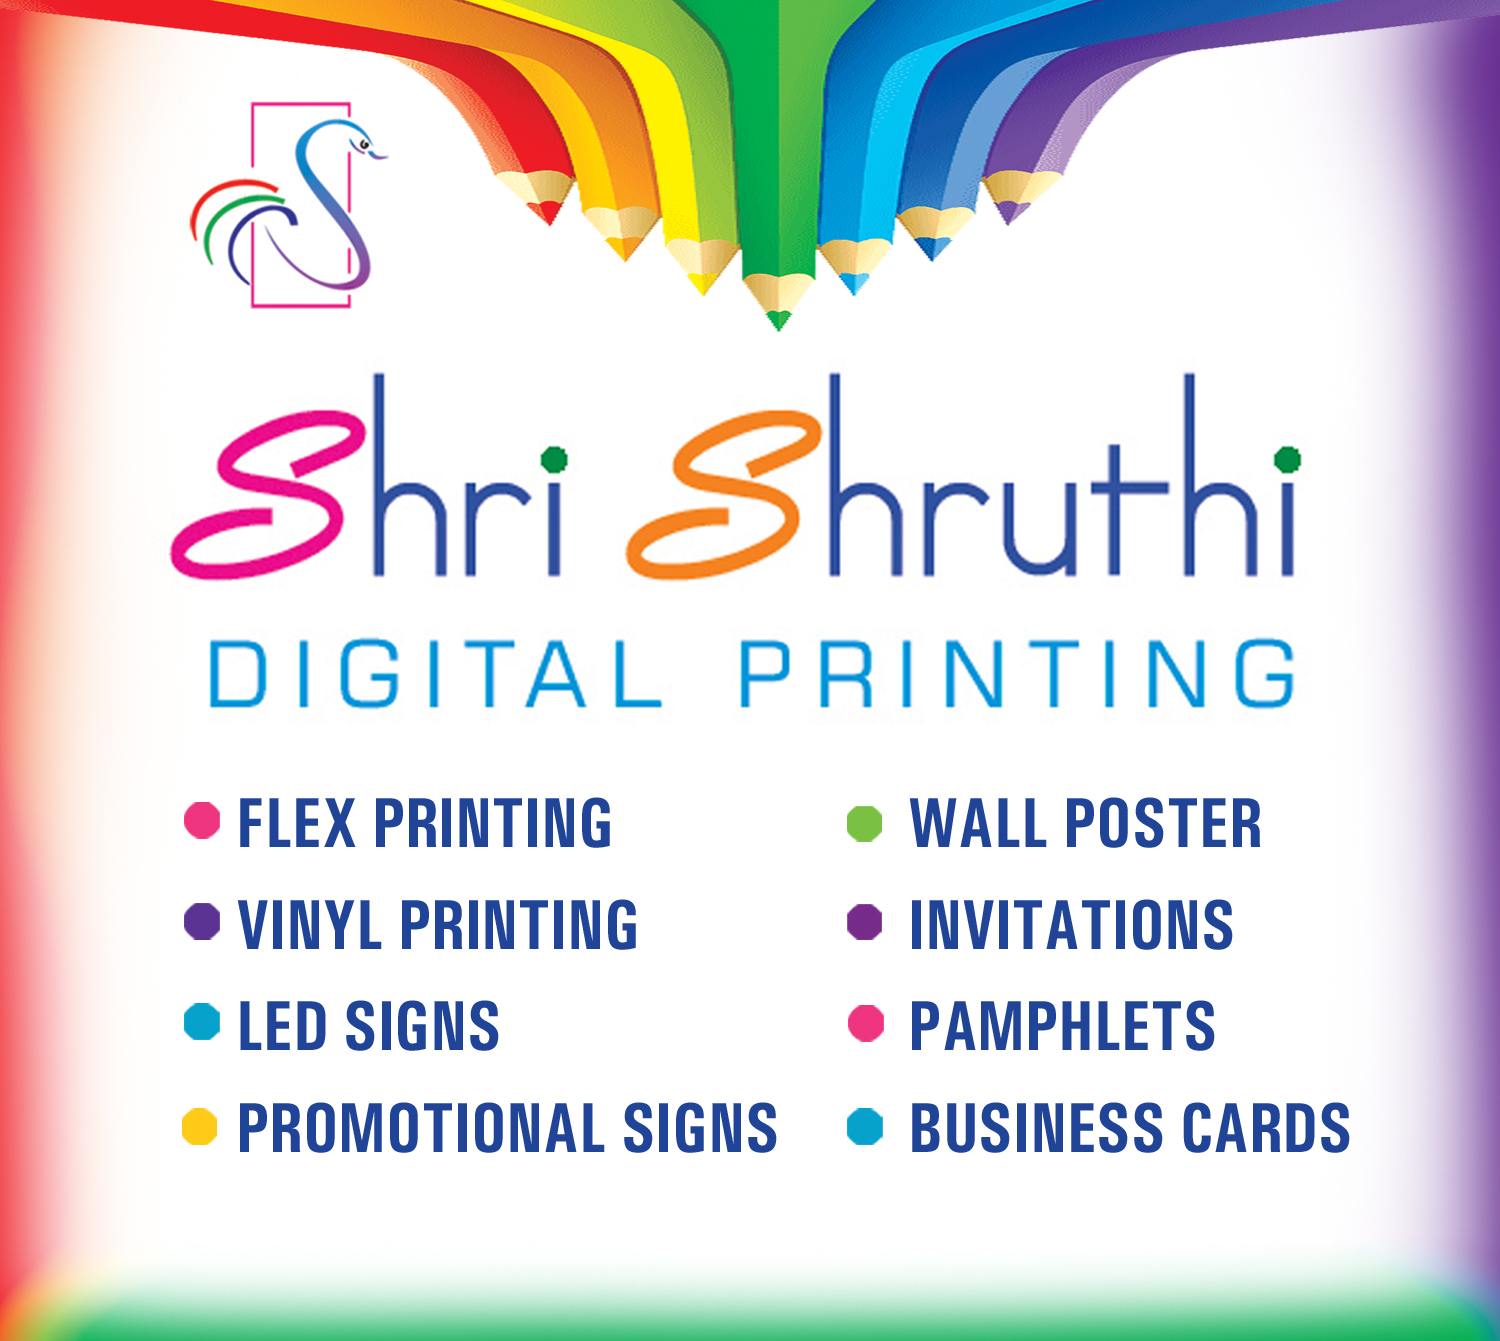 Shri Shruthi Digital